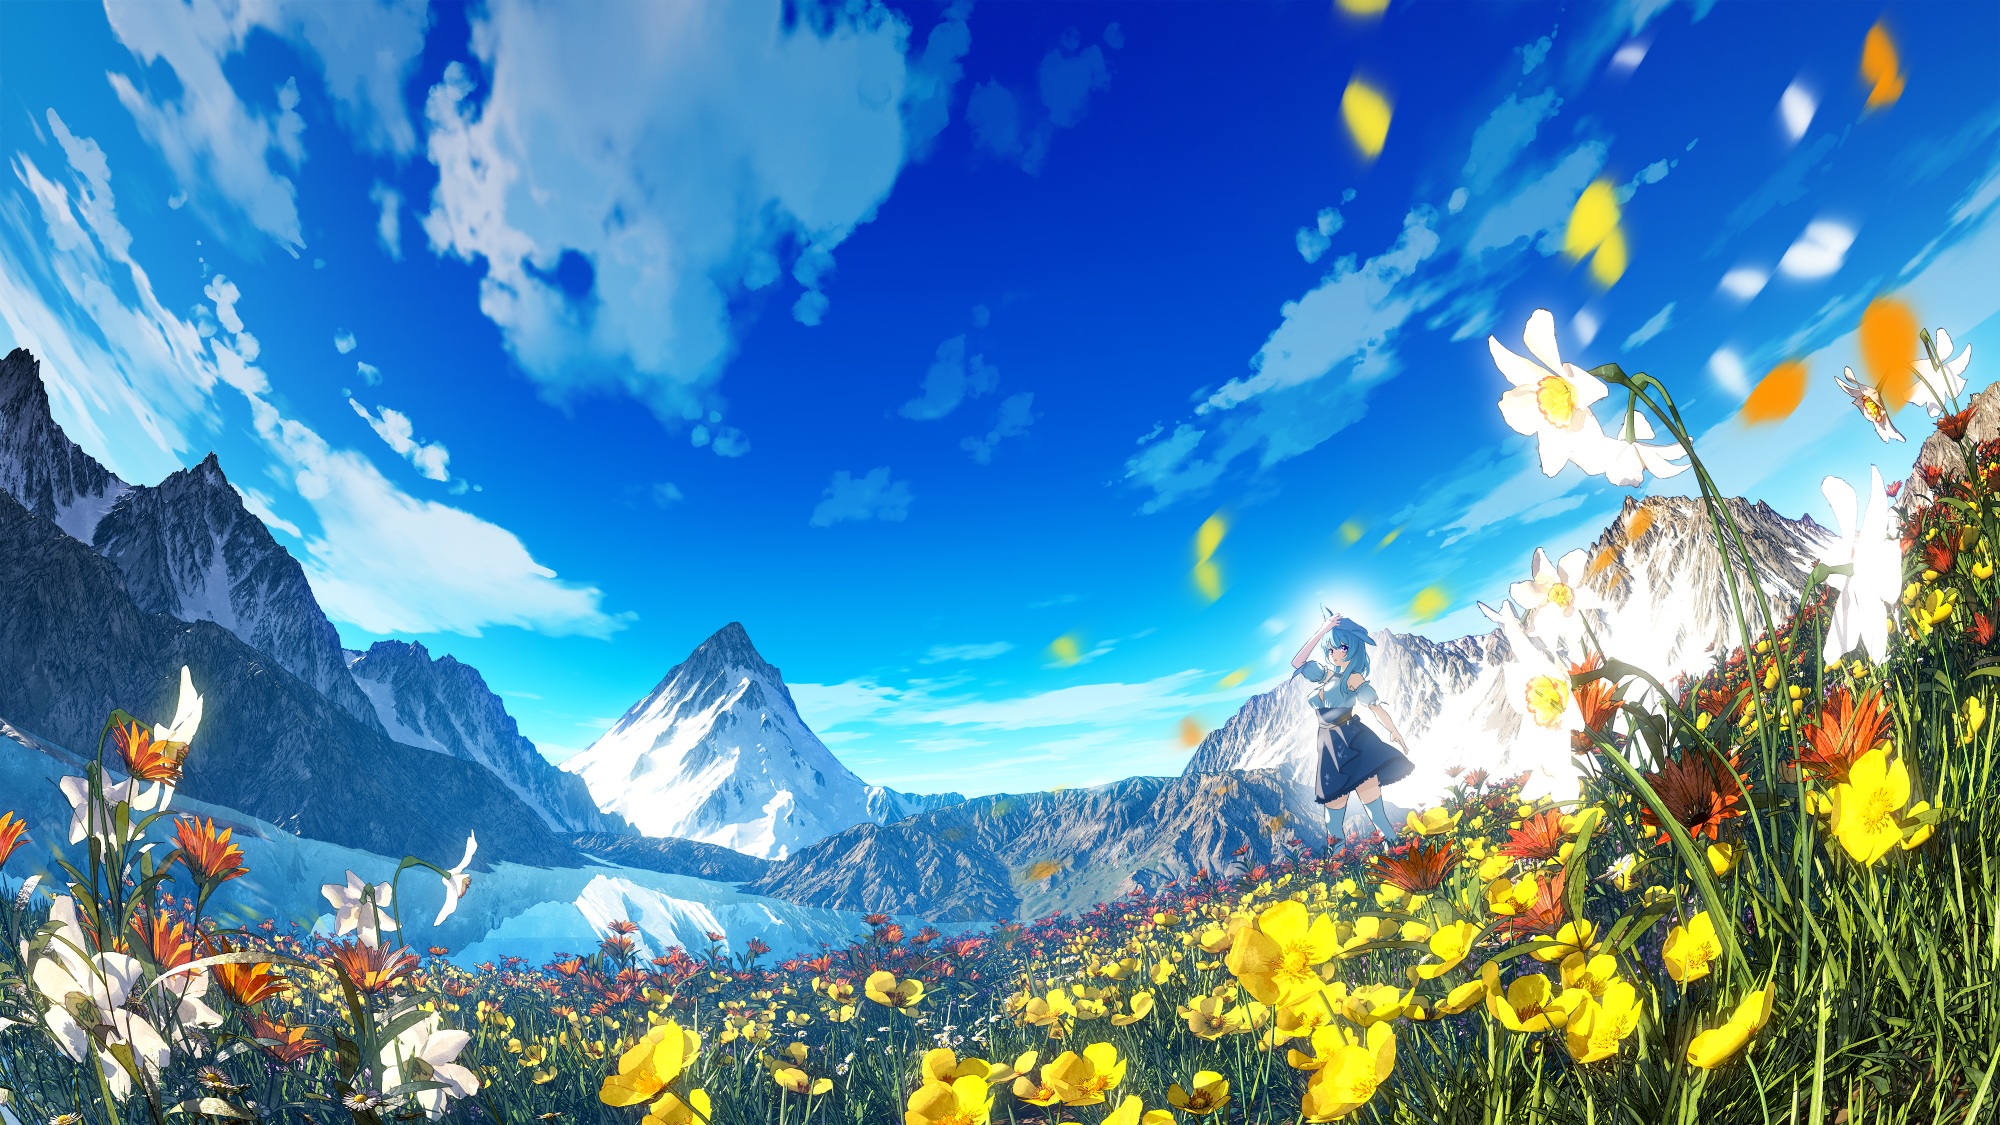 Anime Girls Landscape Flowers Knee High Socks Petals Mountains Sky Clouds Grass Hachio81 Animal Ears 2000x1125